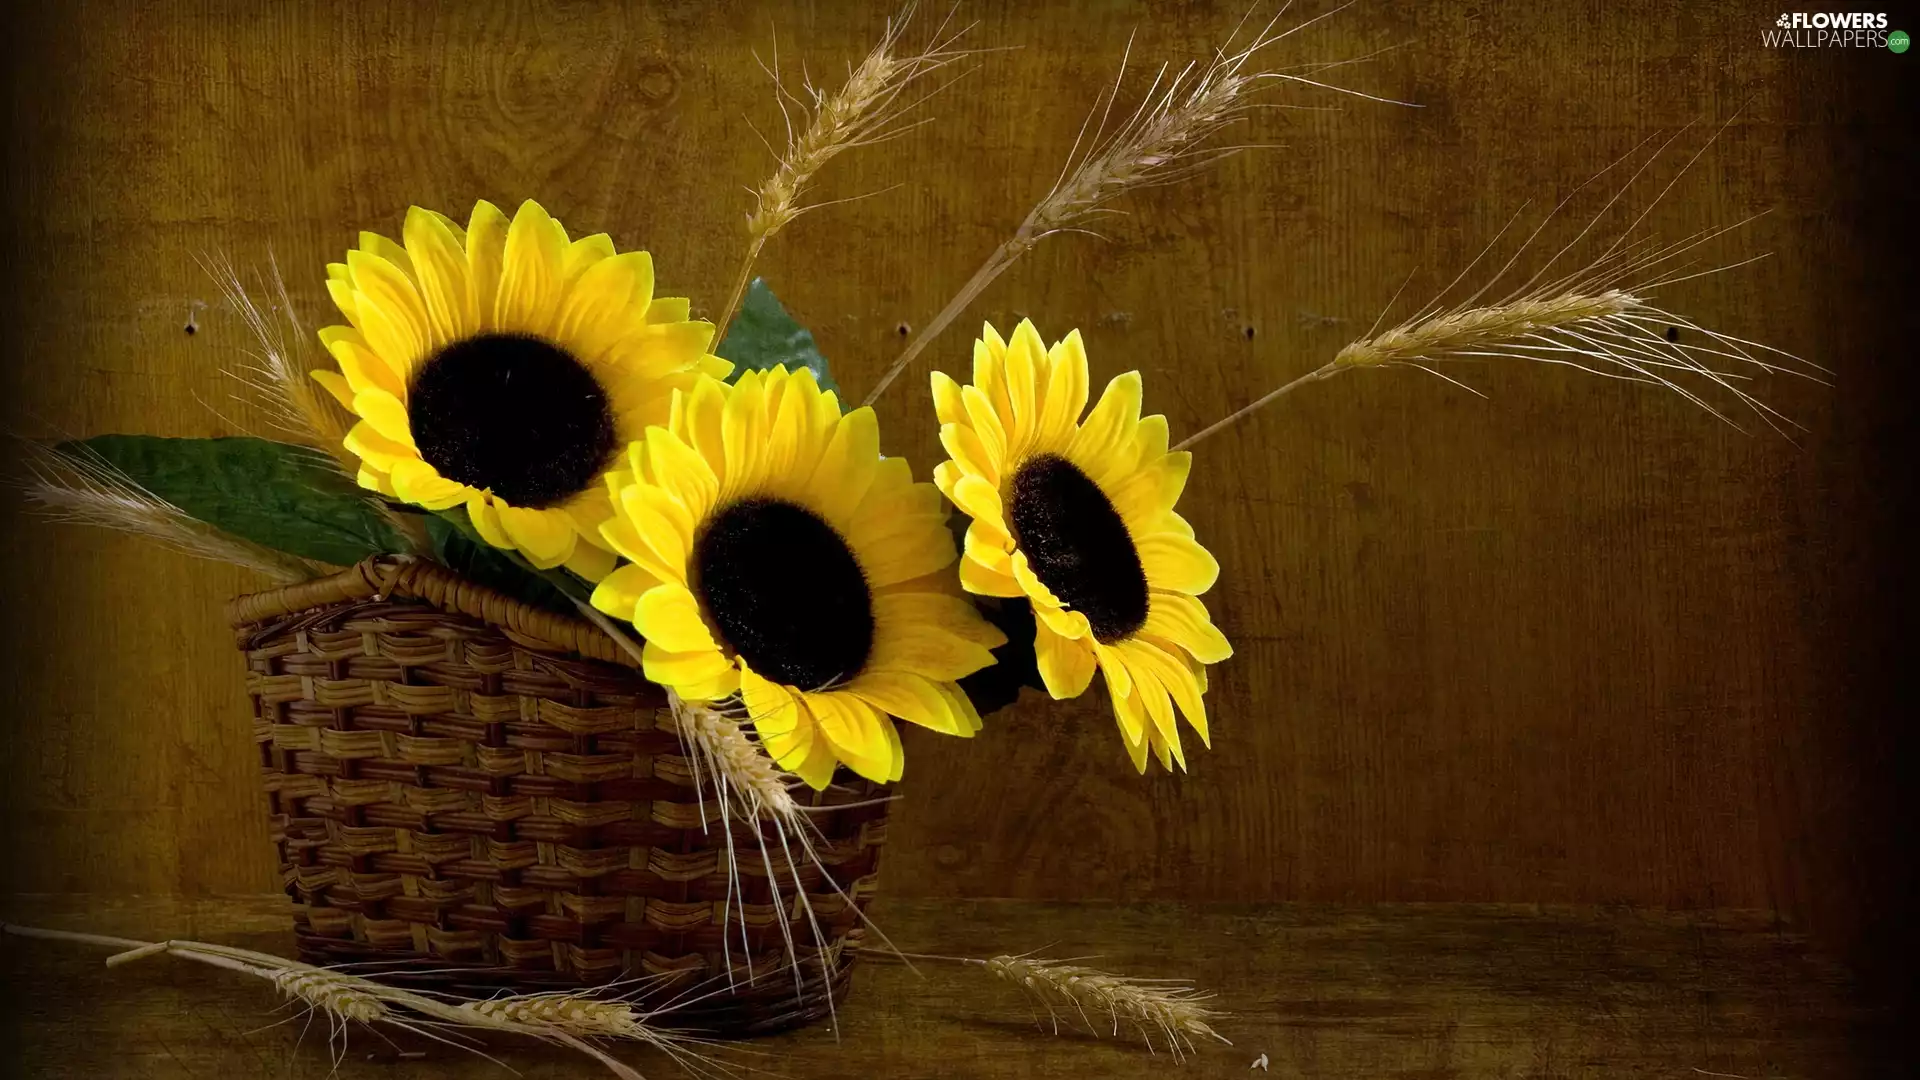 Ears, cereals, basket, Nice sunflowers, wicker